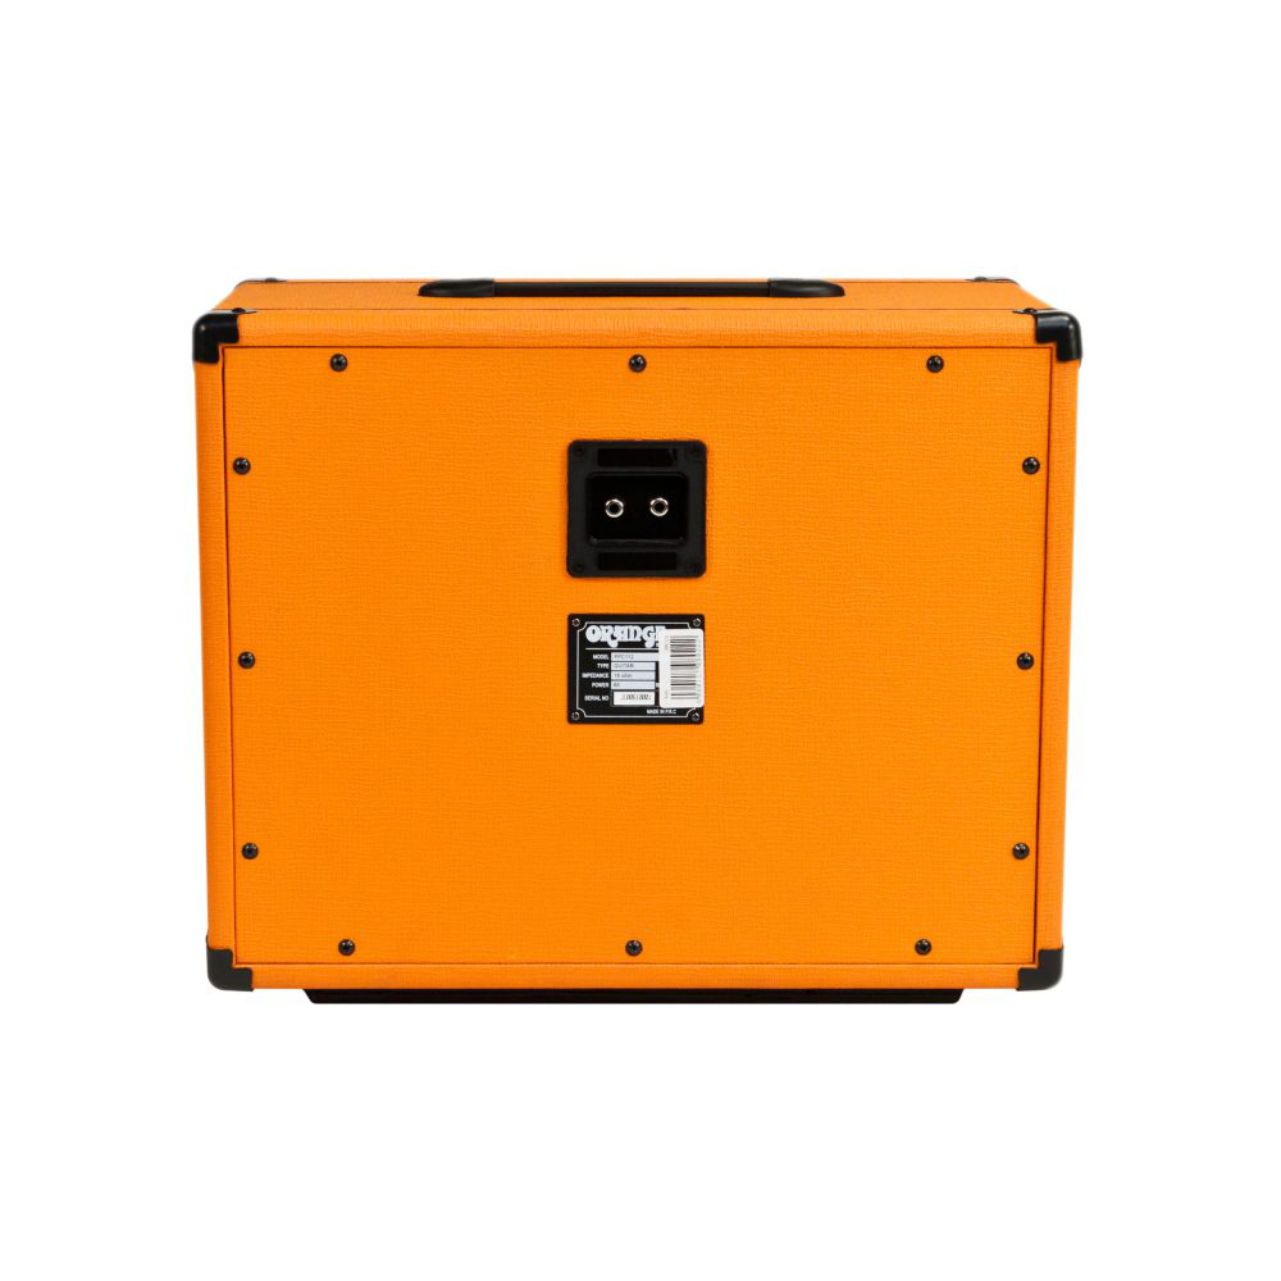 Orange Cabeçote para Guitarra Dark Terror 15 & orange caixa reta para guitarra ppc 112 1×12 60w